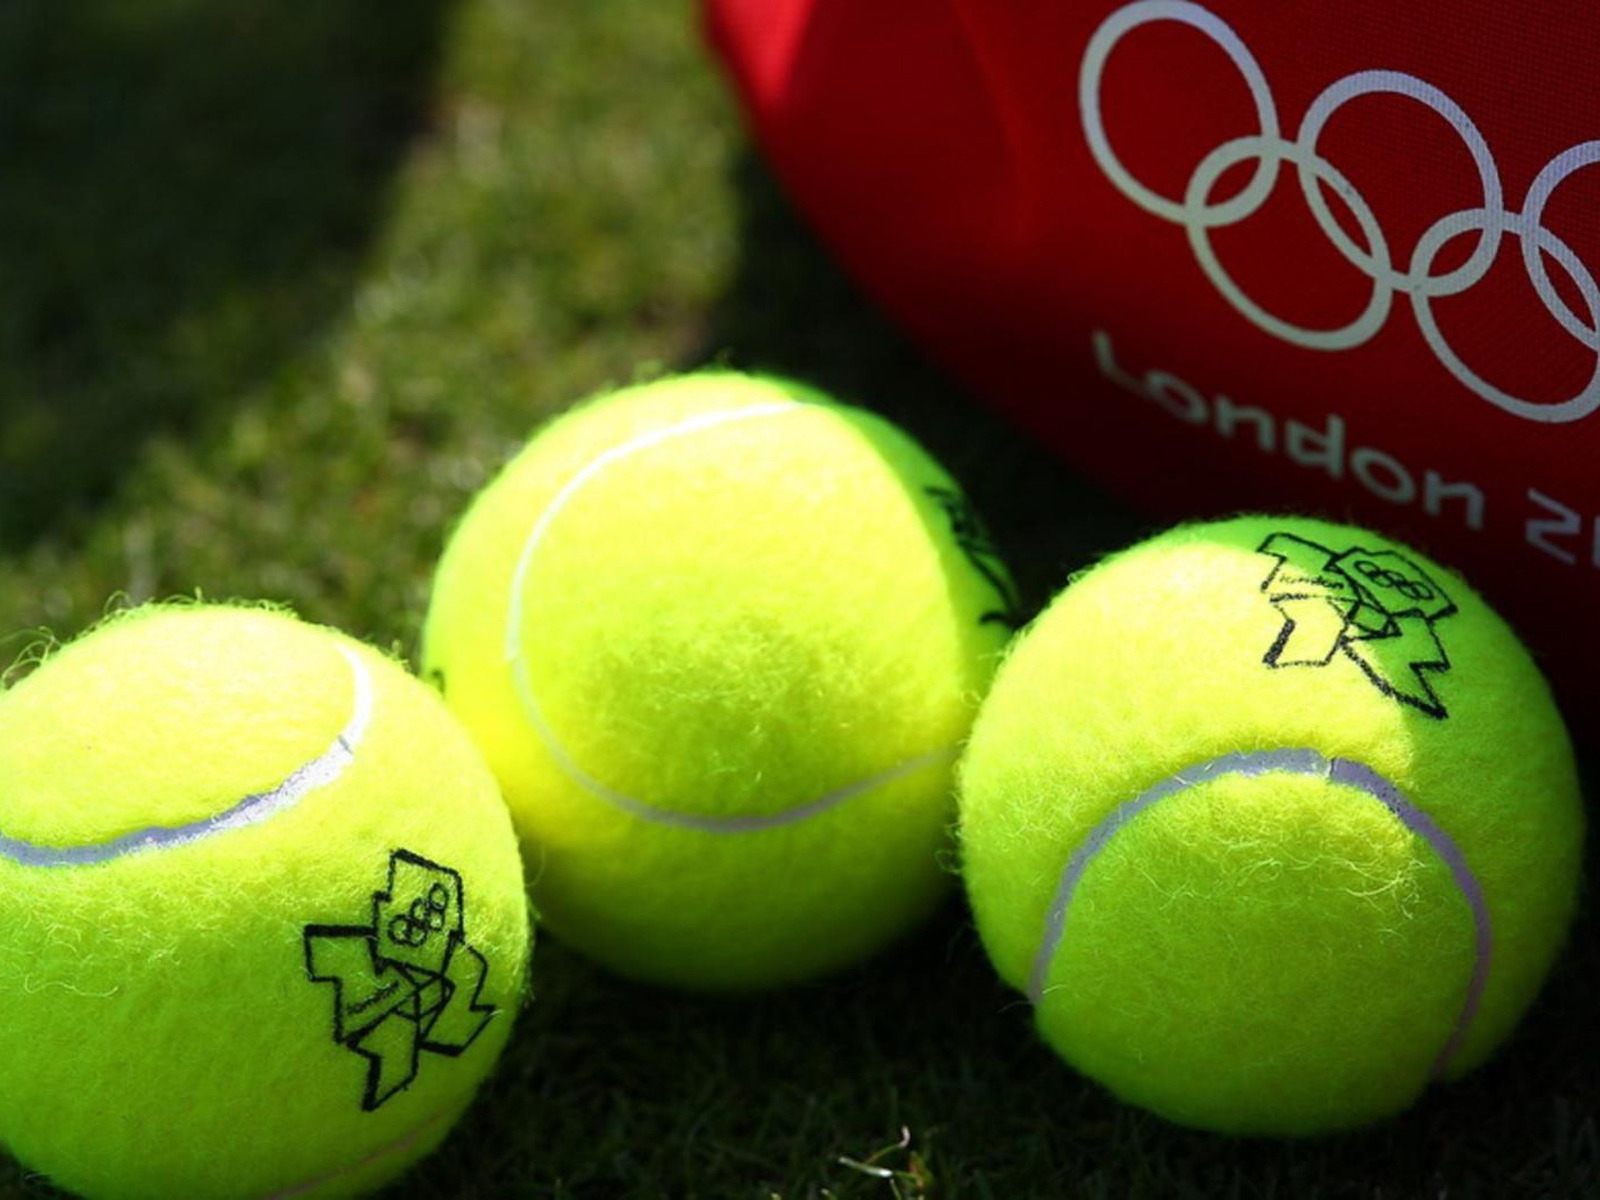 London 2012 Olympics Tennis Balls for 1600 x 1200 resolution